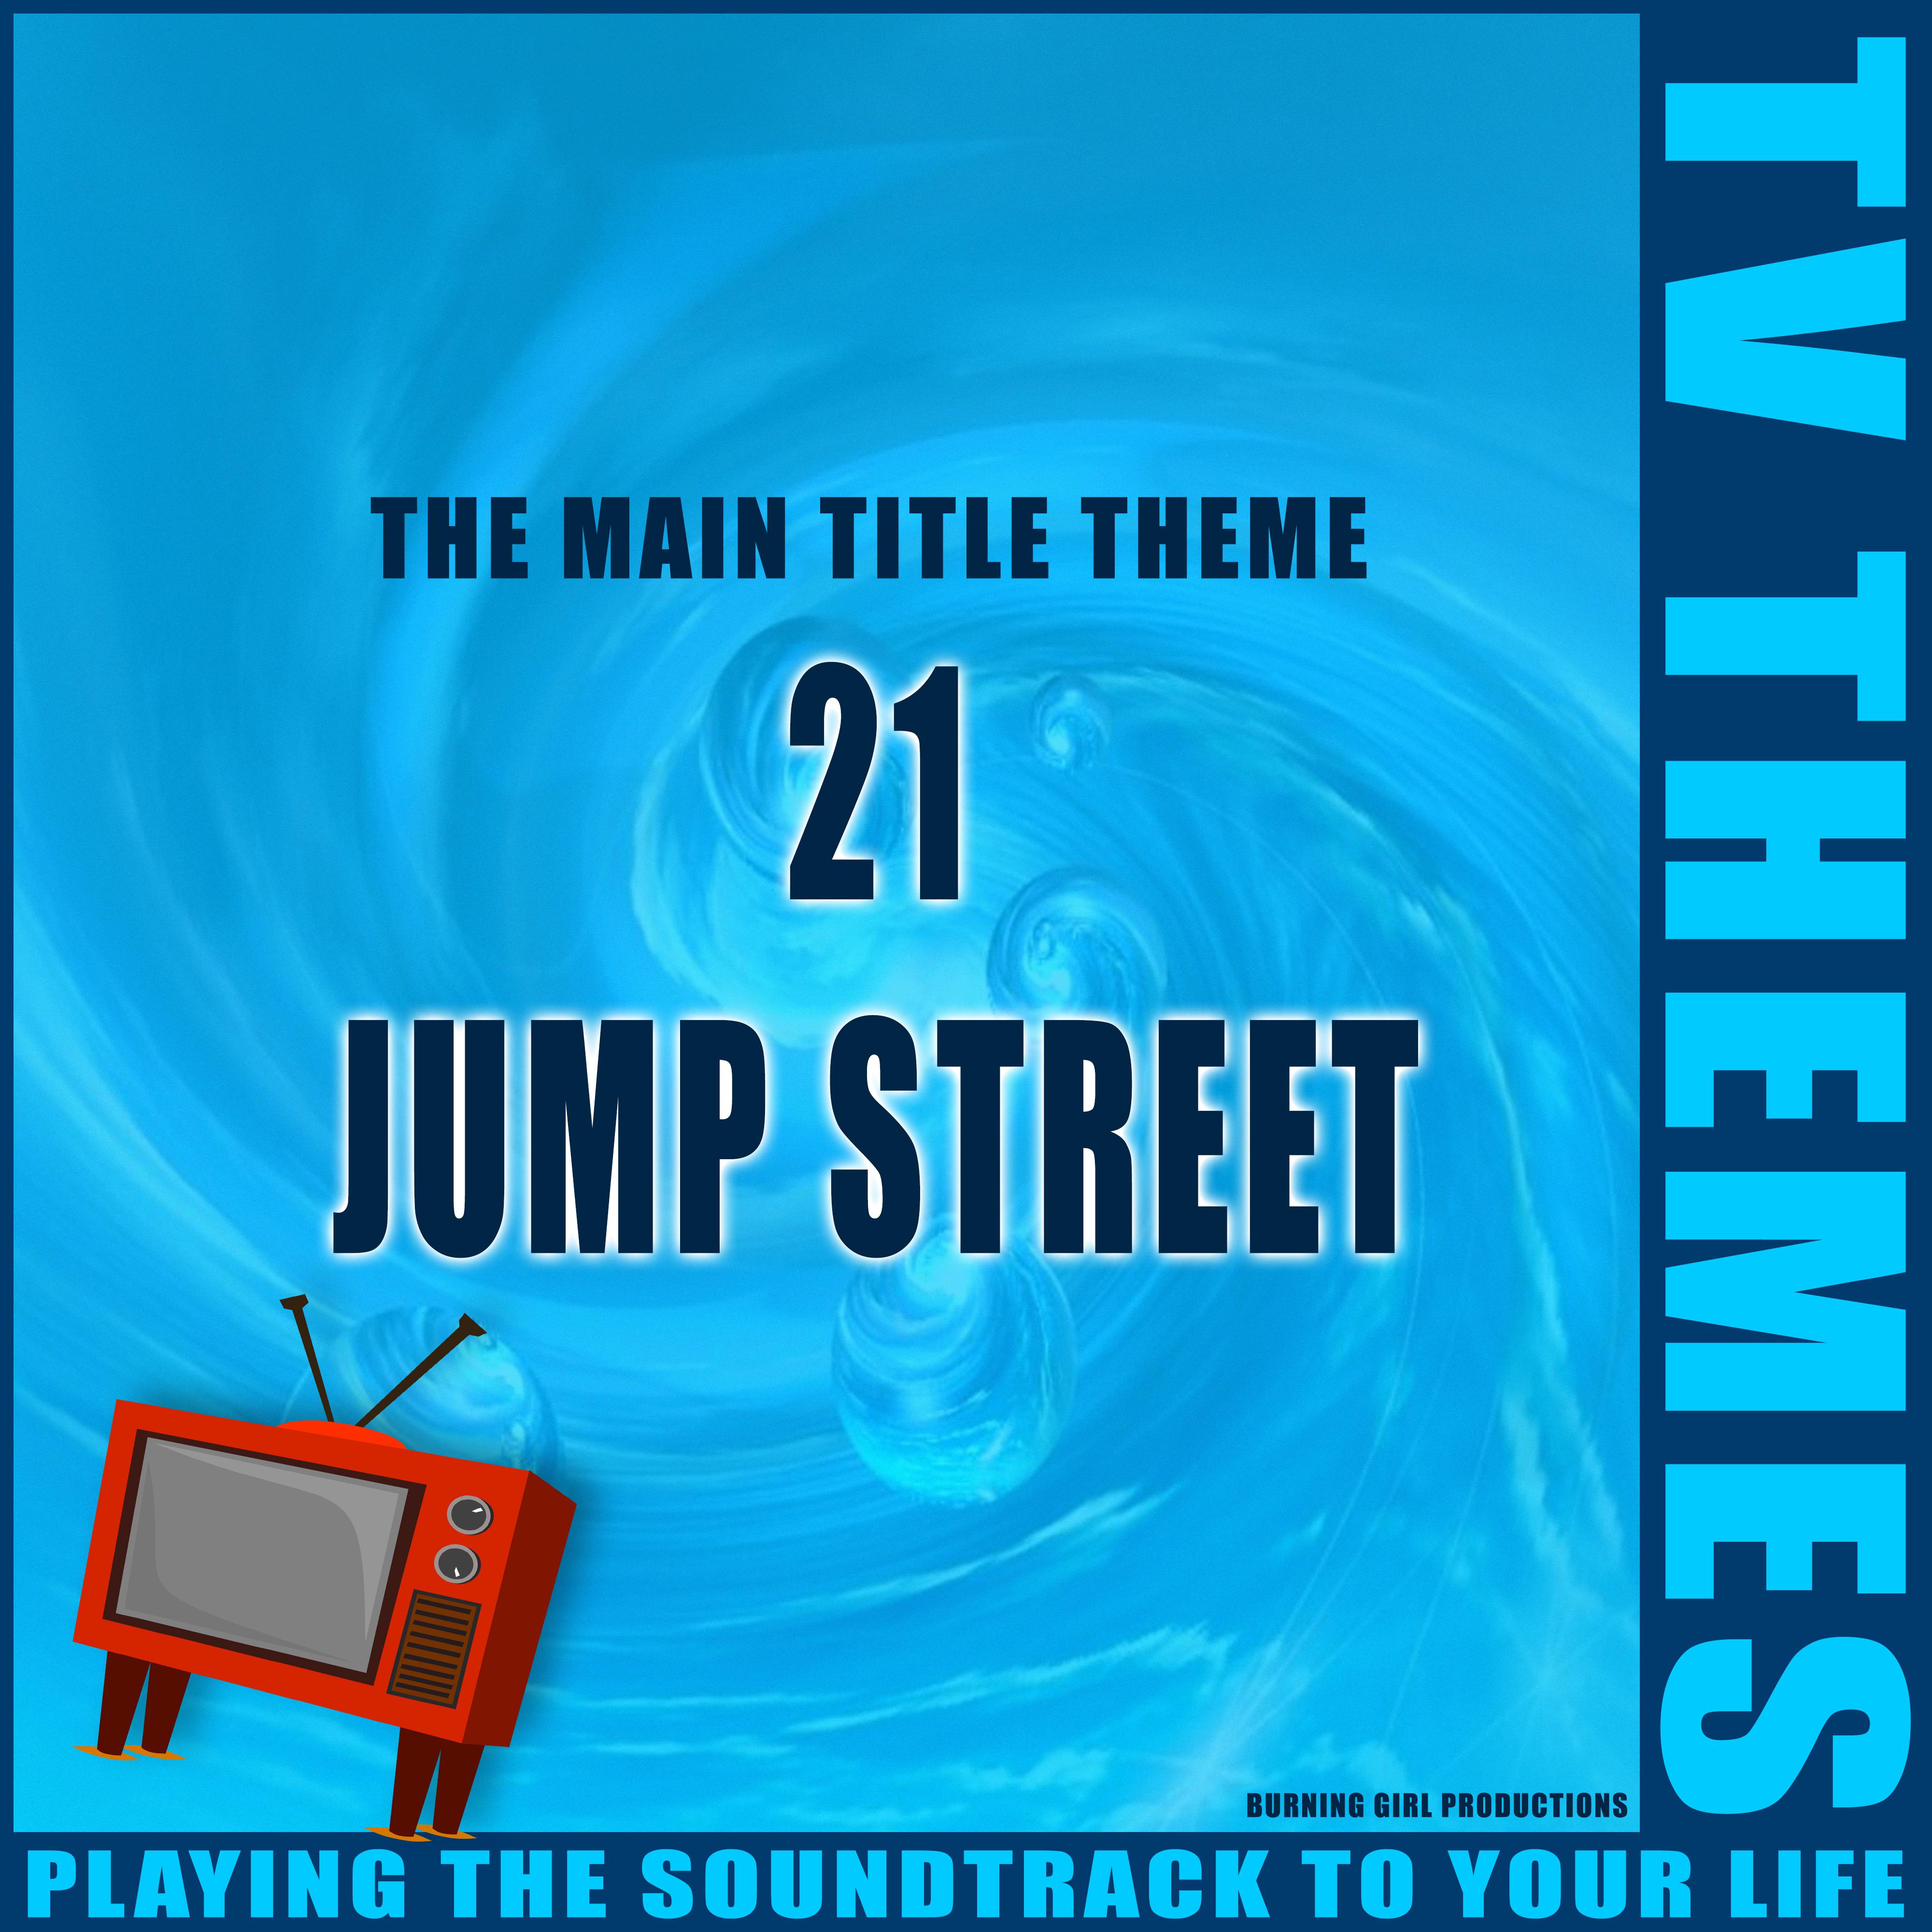 The Main Title Theme - 21 Jump Street